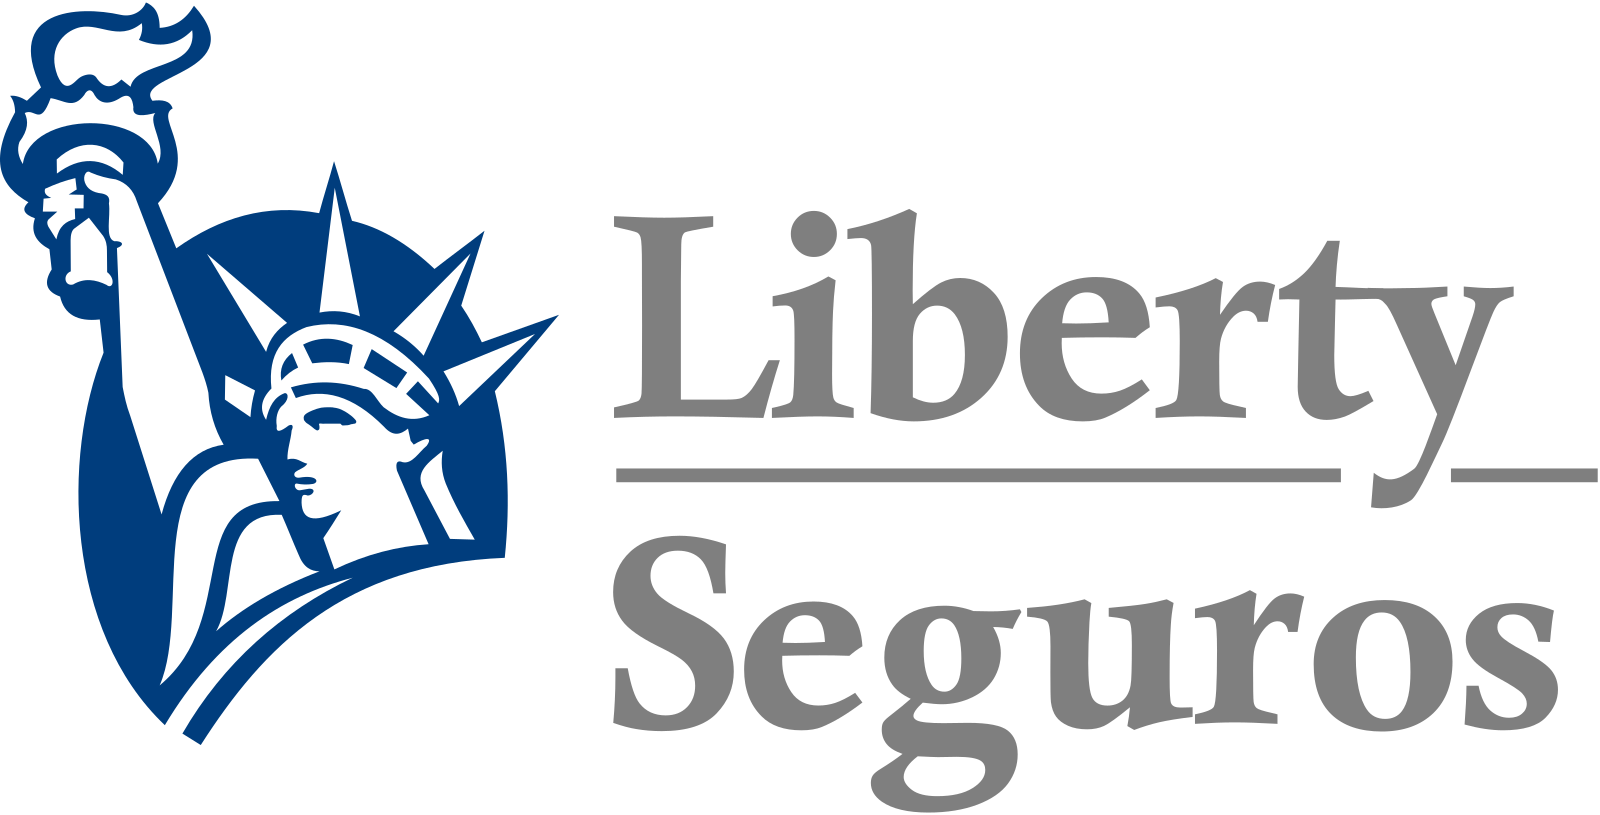 Liberty Oil Logo